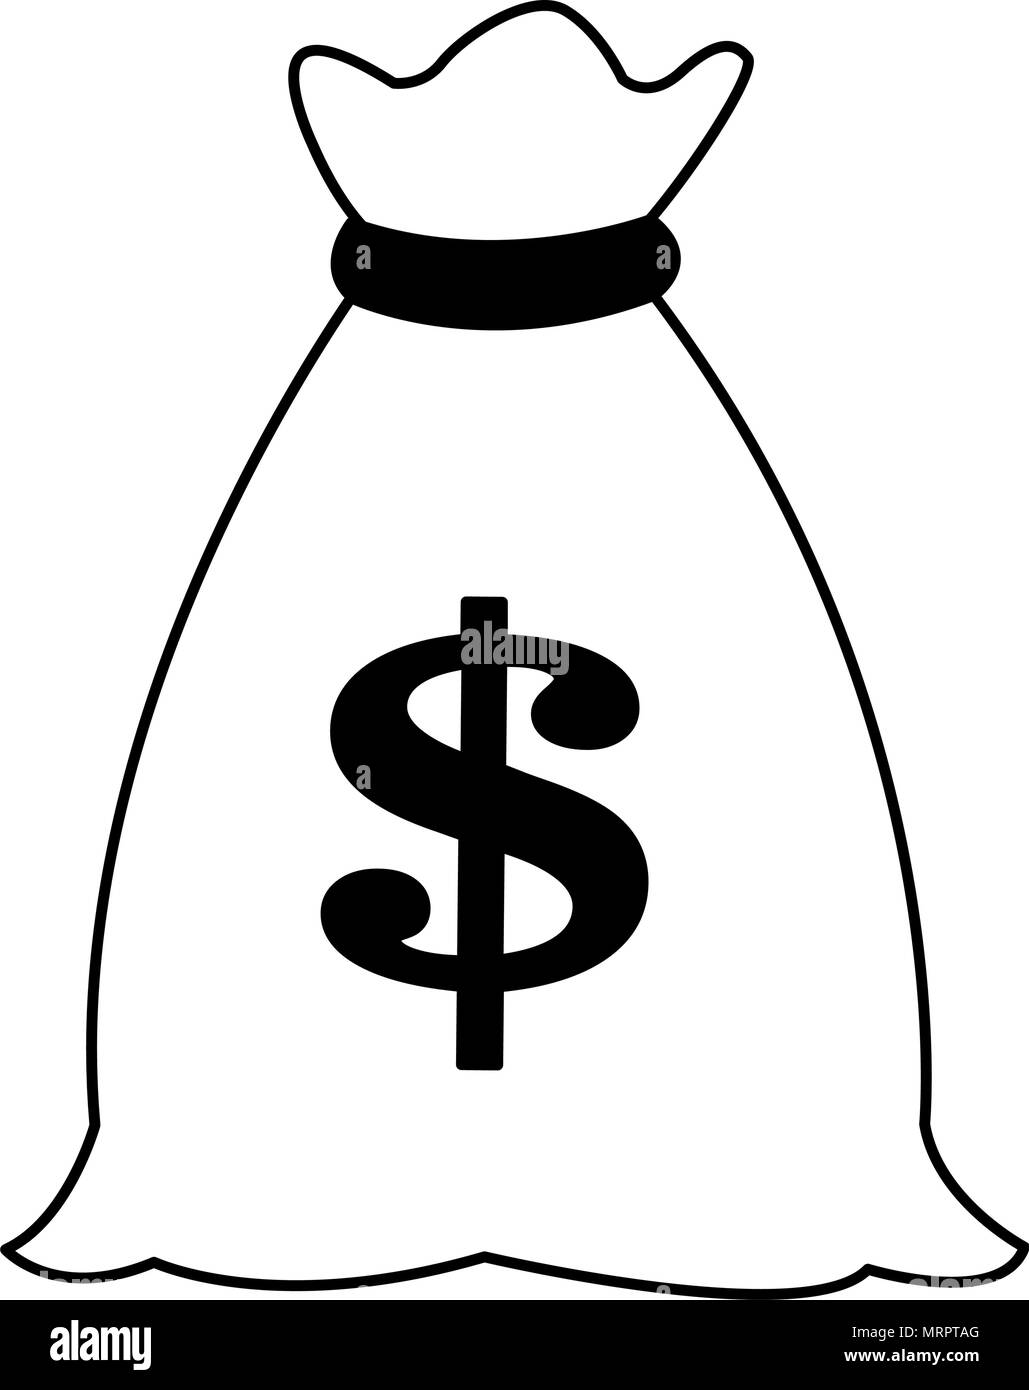 Money bag cartoon Black and White Stock Photos & Images - Alamy